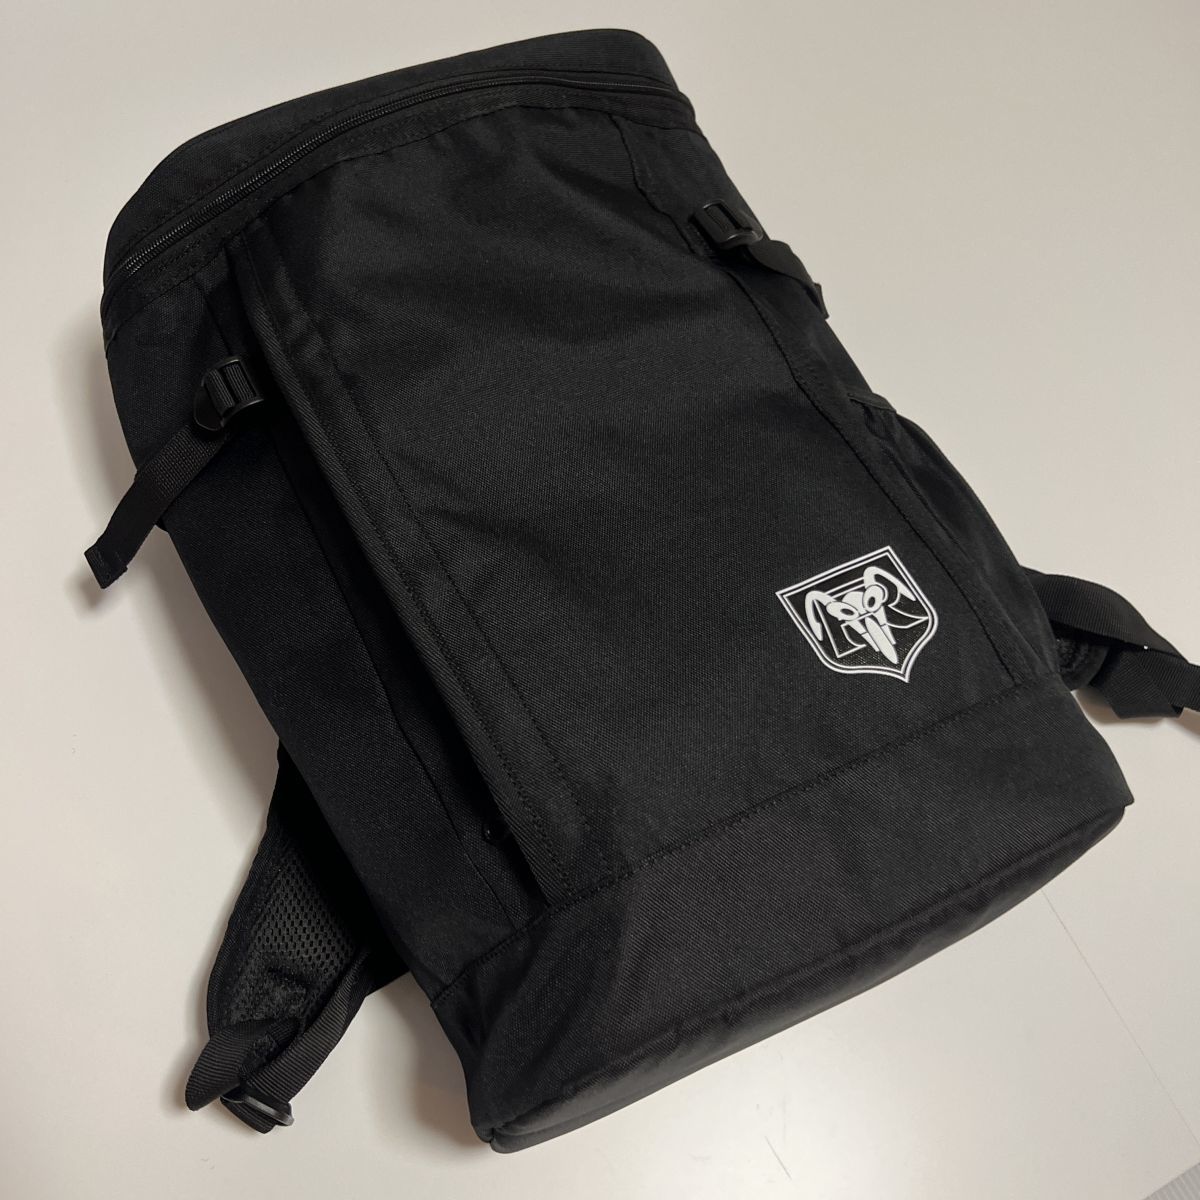 *BANDAI Bandai Kamen Rider ultra rare new goods men's backpack rucksack bag BAG black [2654656F] one six *QWER*